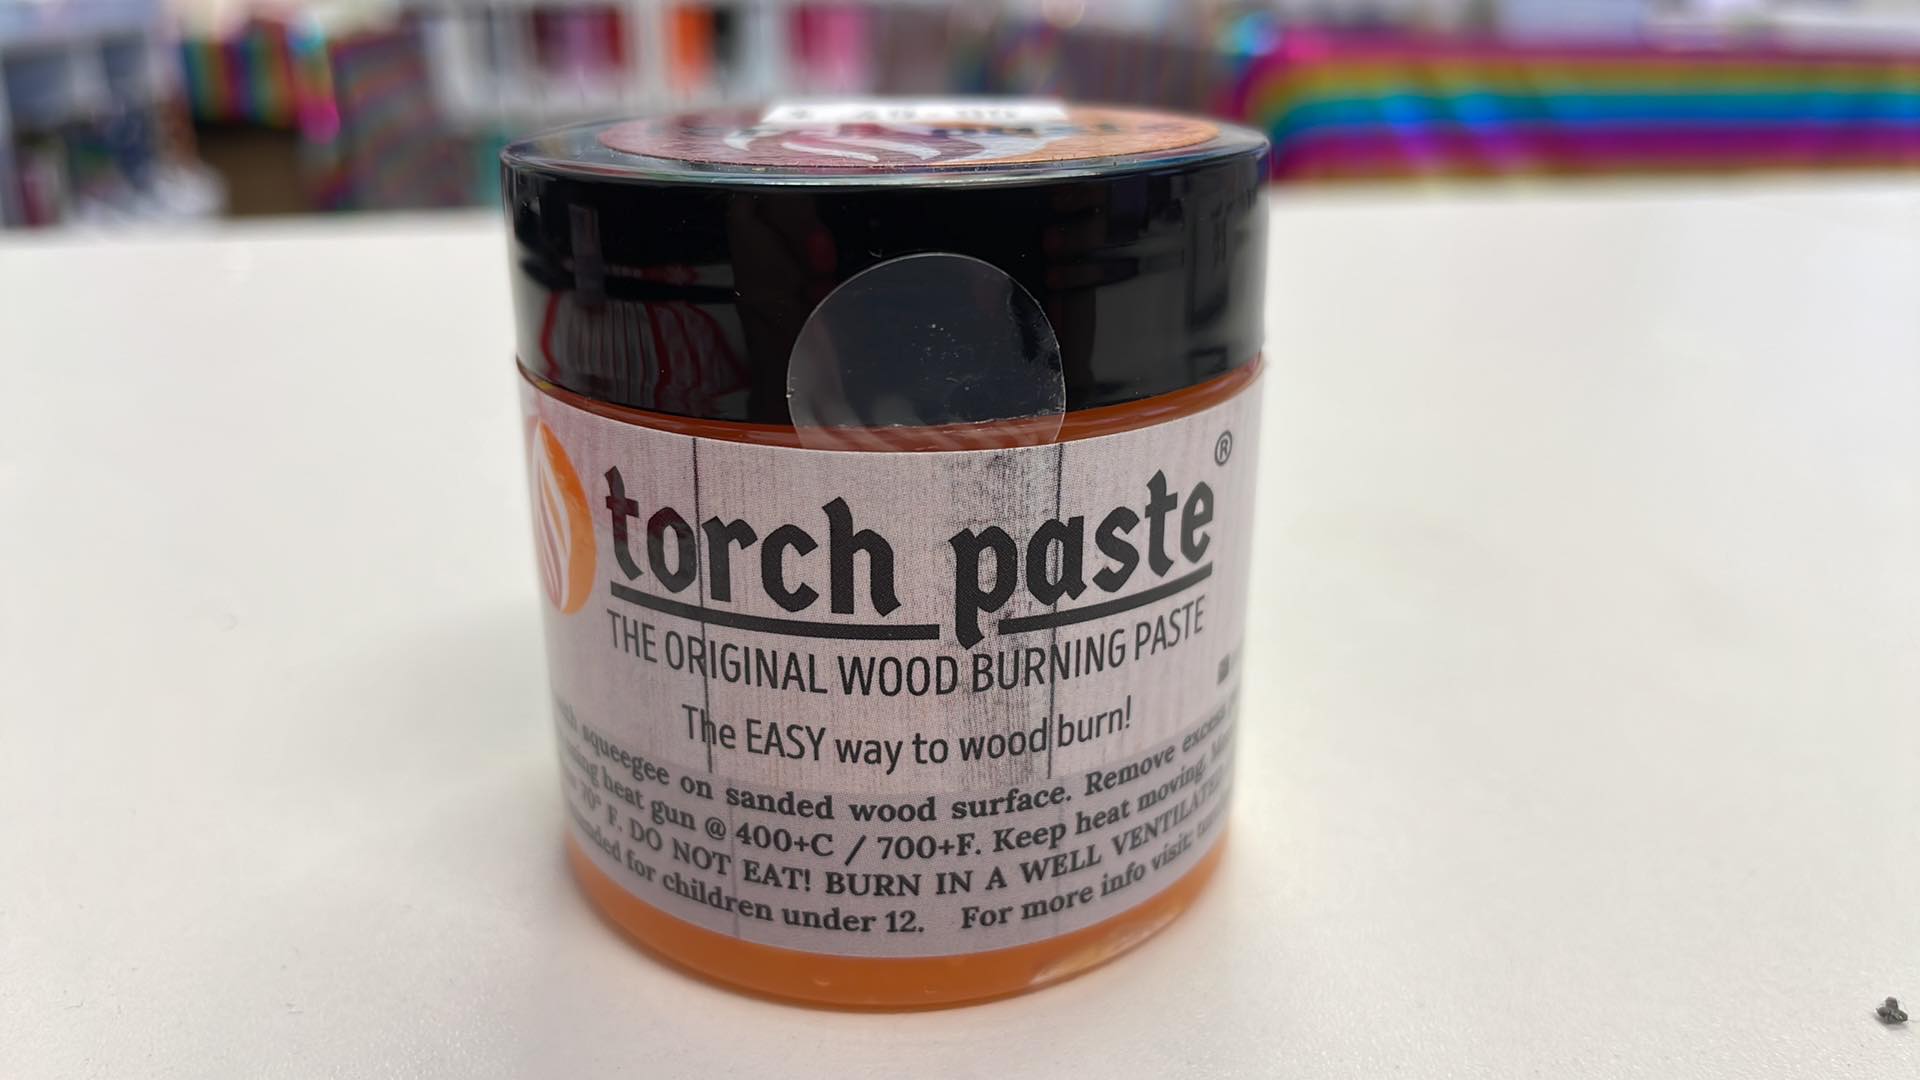 Torch Paste - The Original Wood Burning Paste